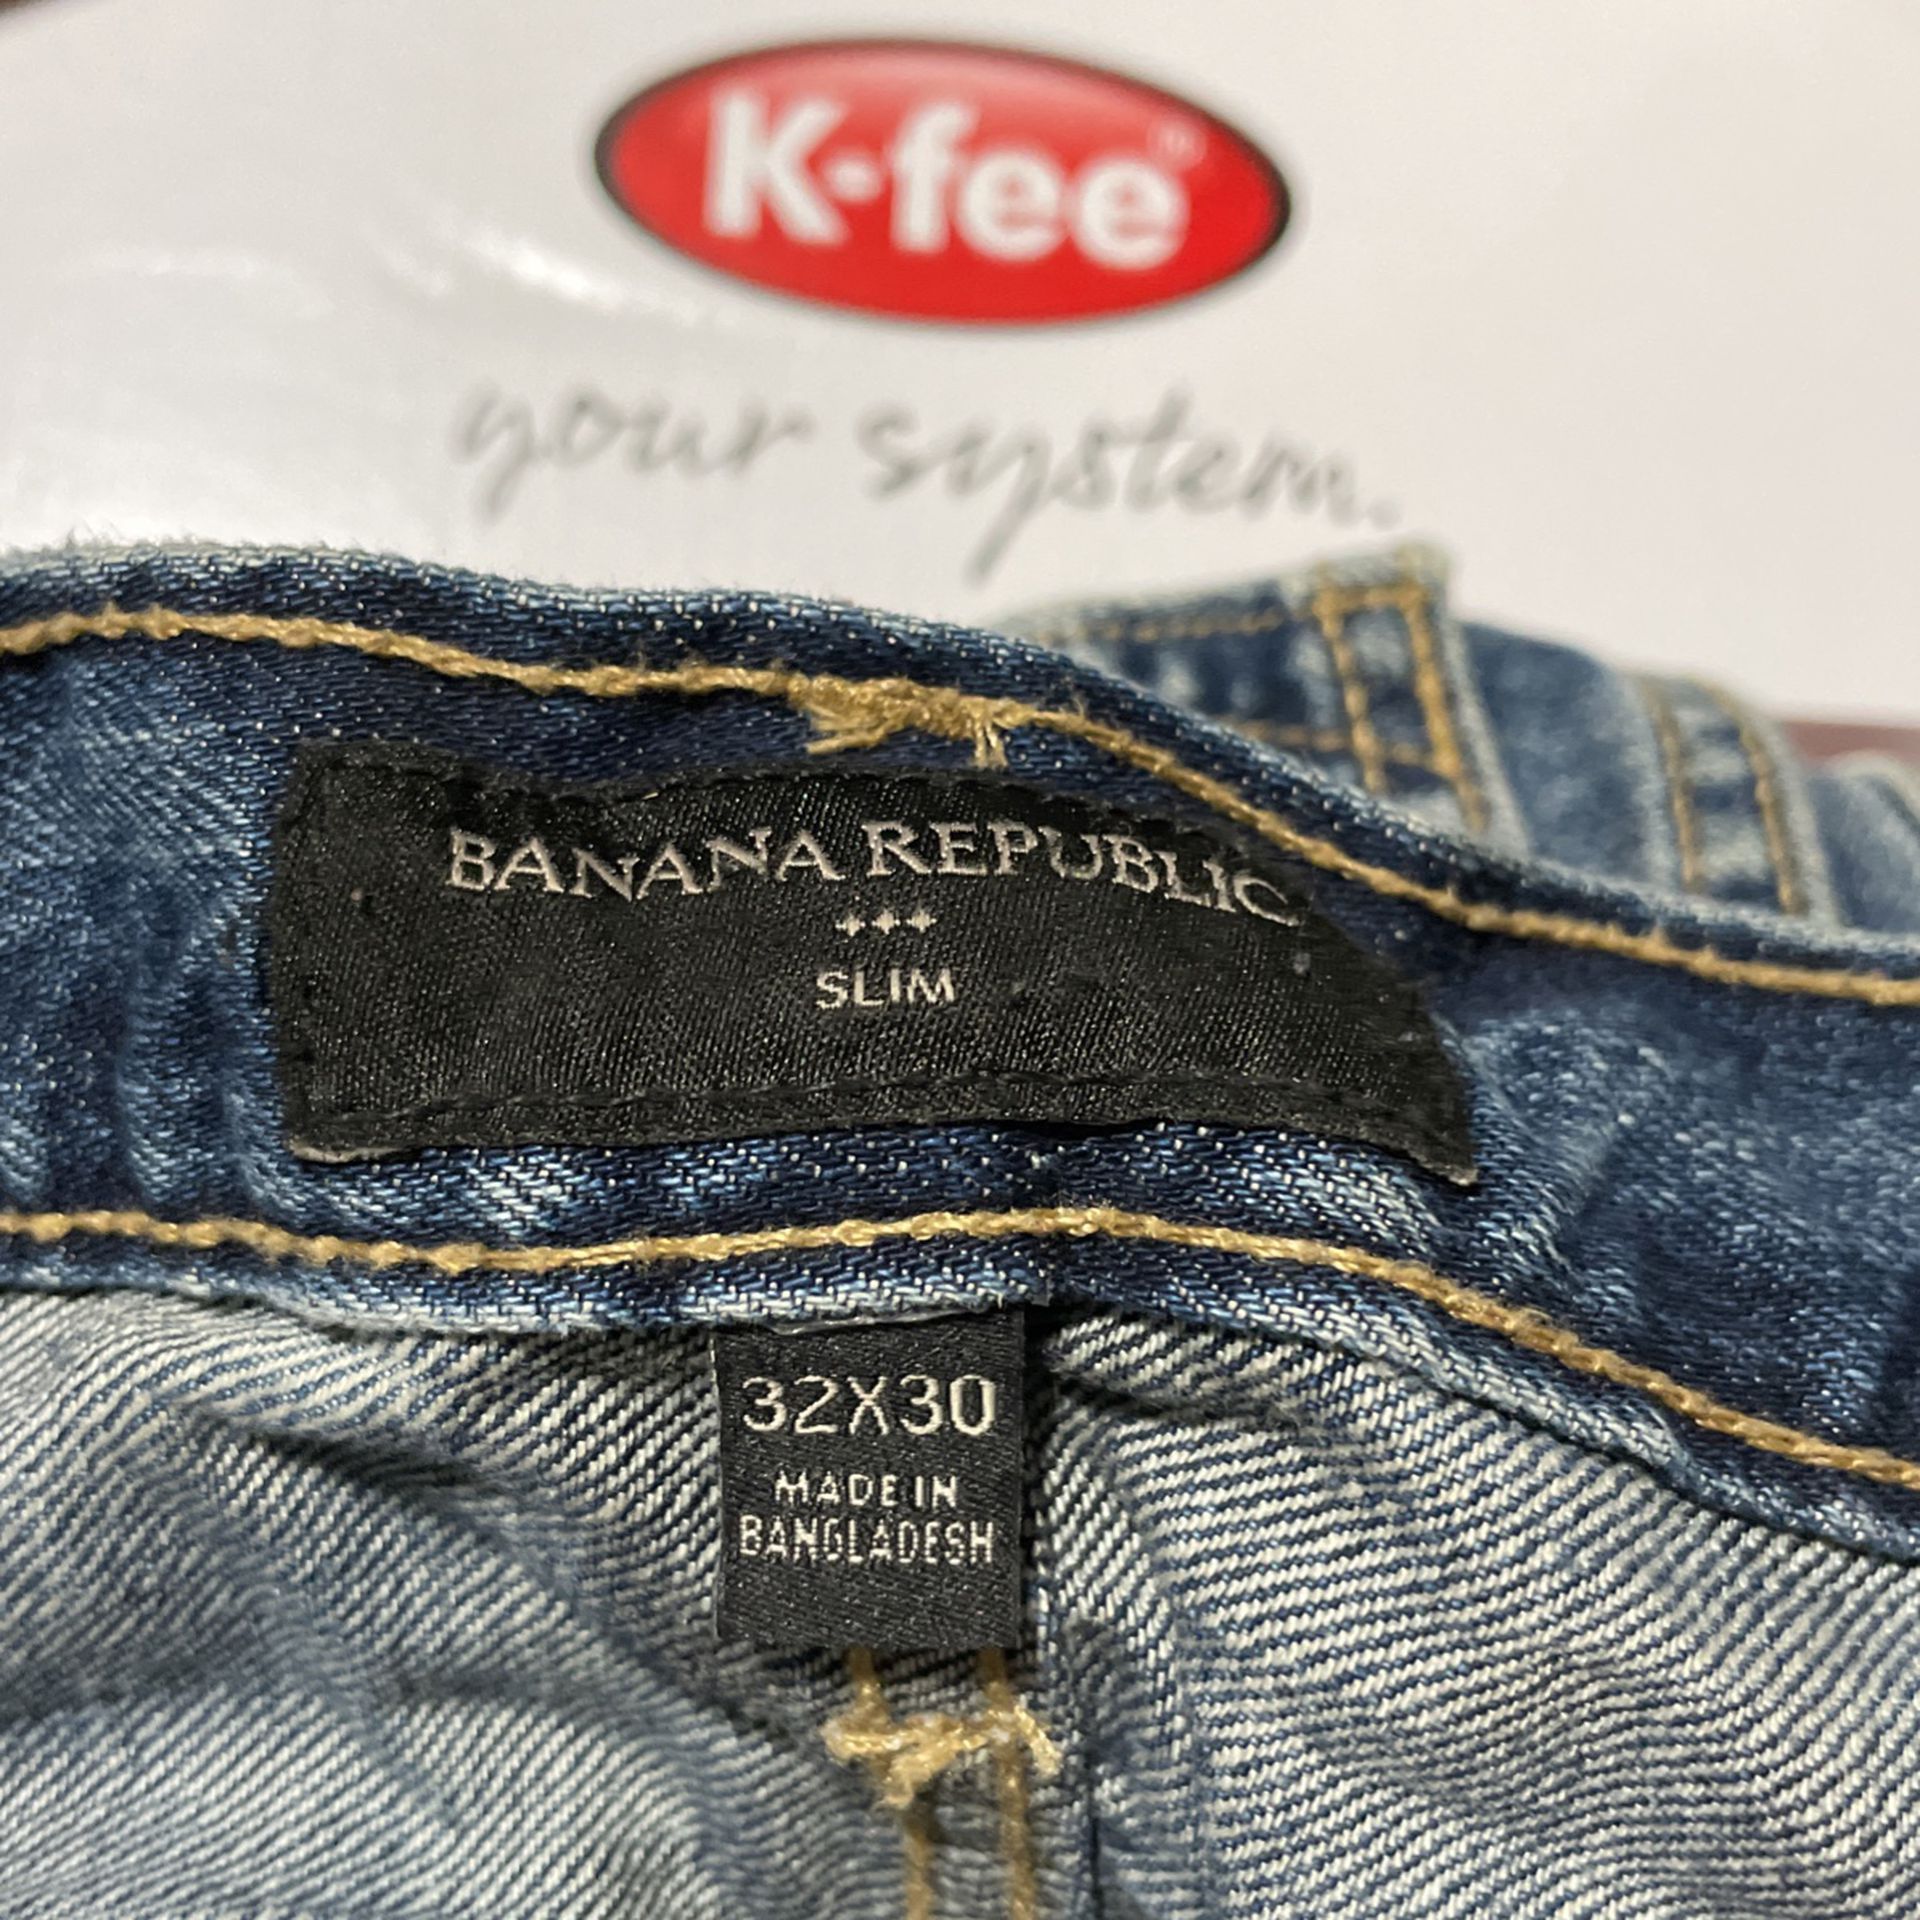  Banana republic slim fit jeans 32 x 30